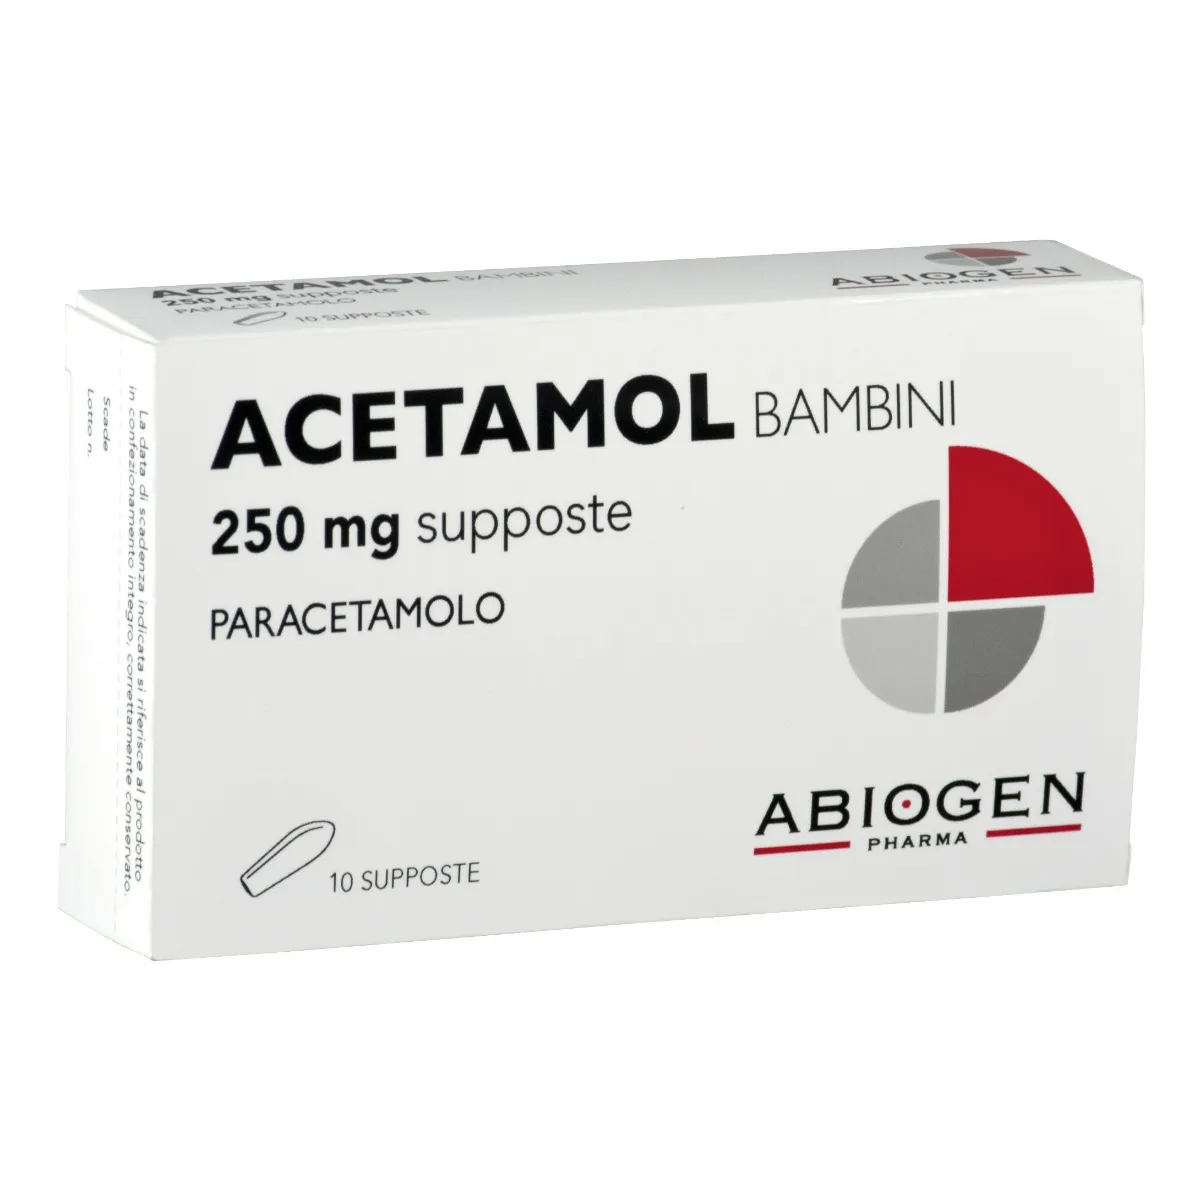 Acetamol 250 mg Bambini Paracetamolo 10 Supposte